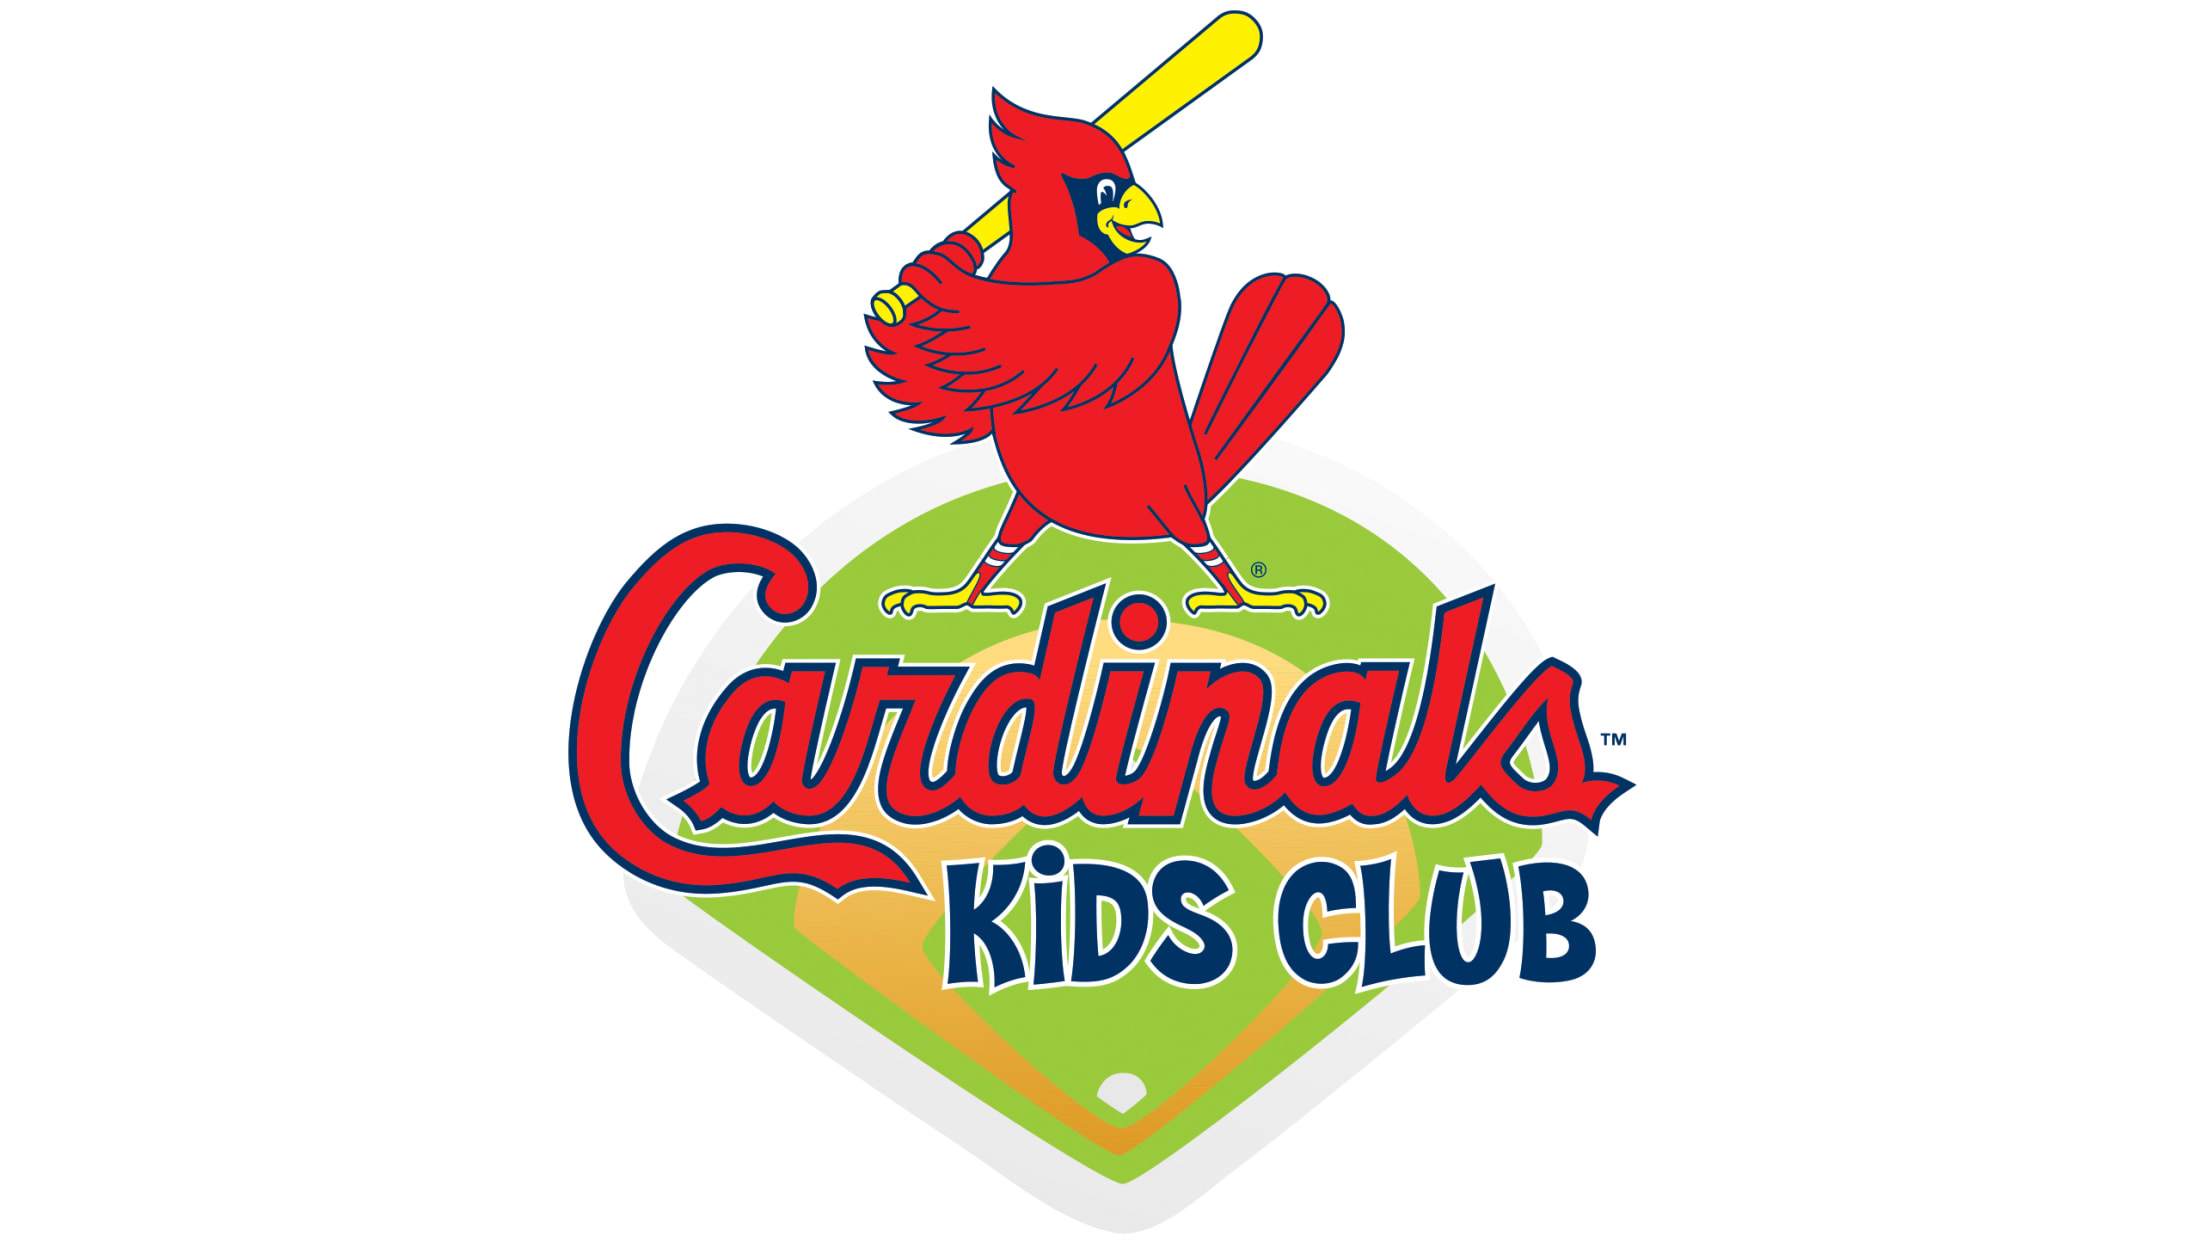 St. Louis Cardinals in 2023  Mlb team logos, Mlb baseball, St louis  cardinals